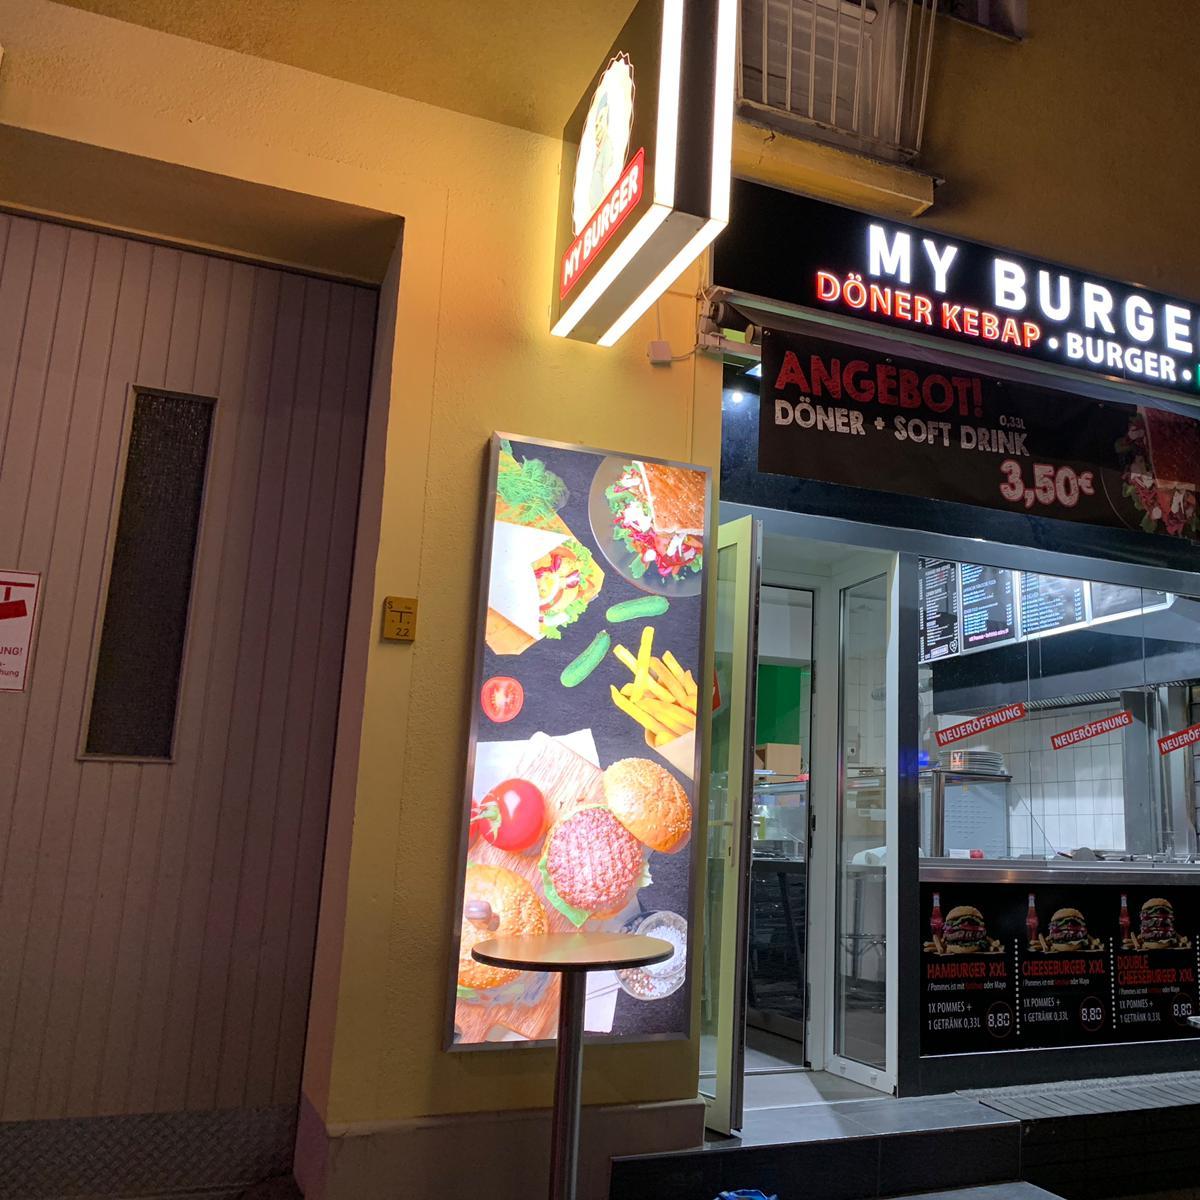 Restaurant "My Burger" in  Berlin